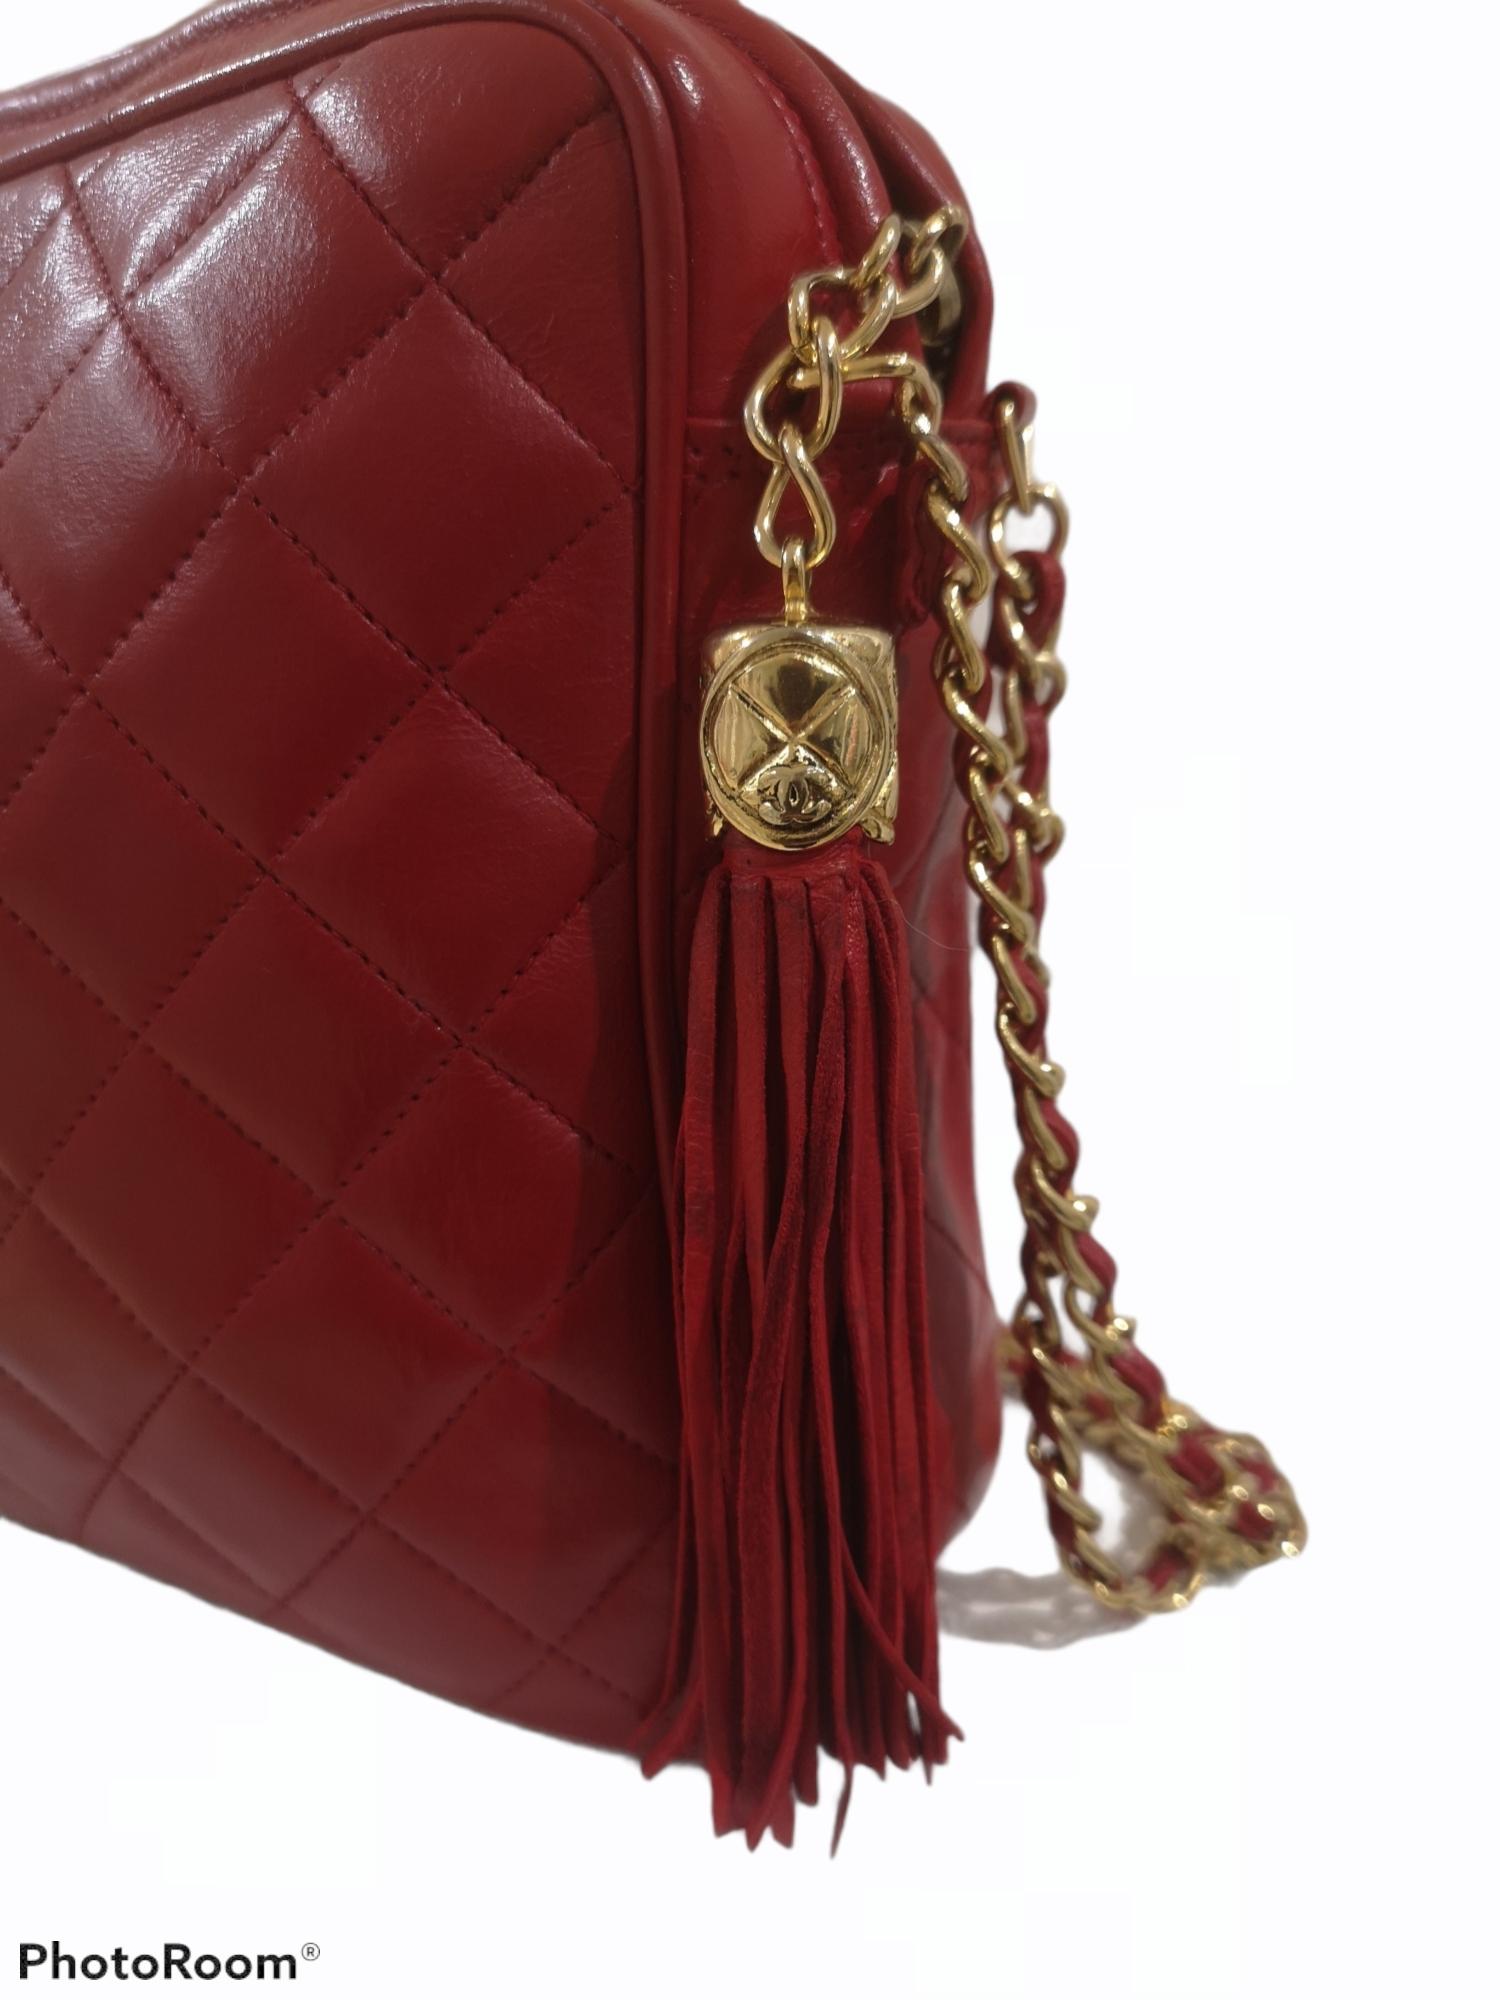 Chanel Camera bag red leather gold tone chain shoulder bag 3